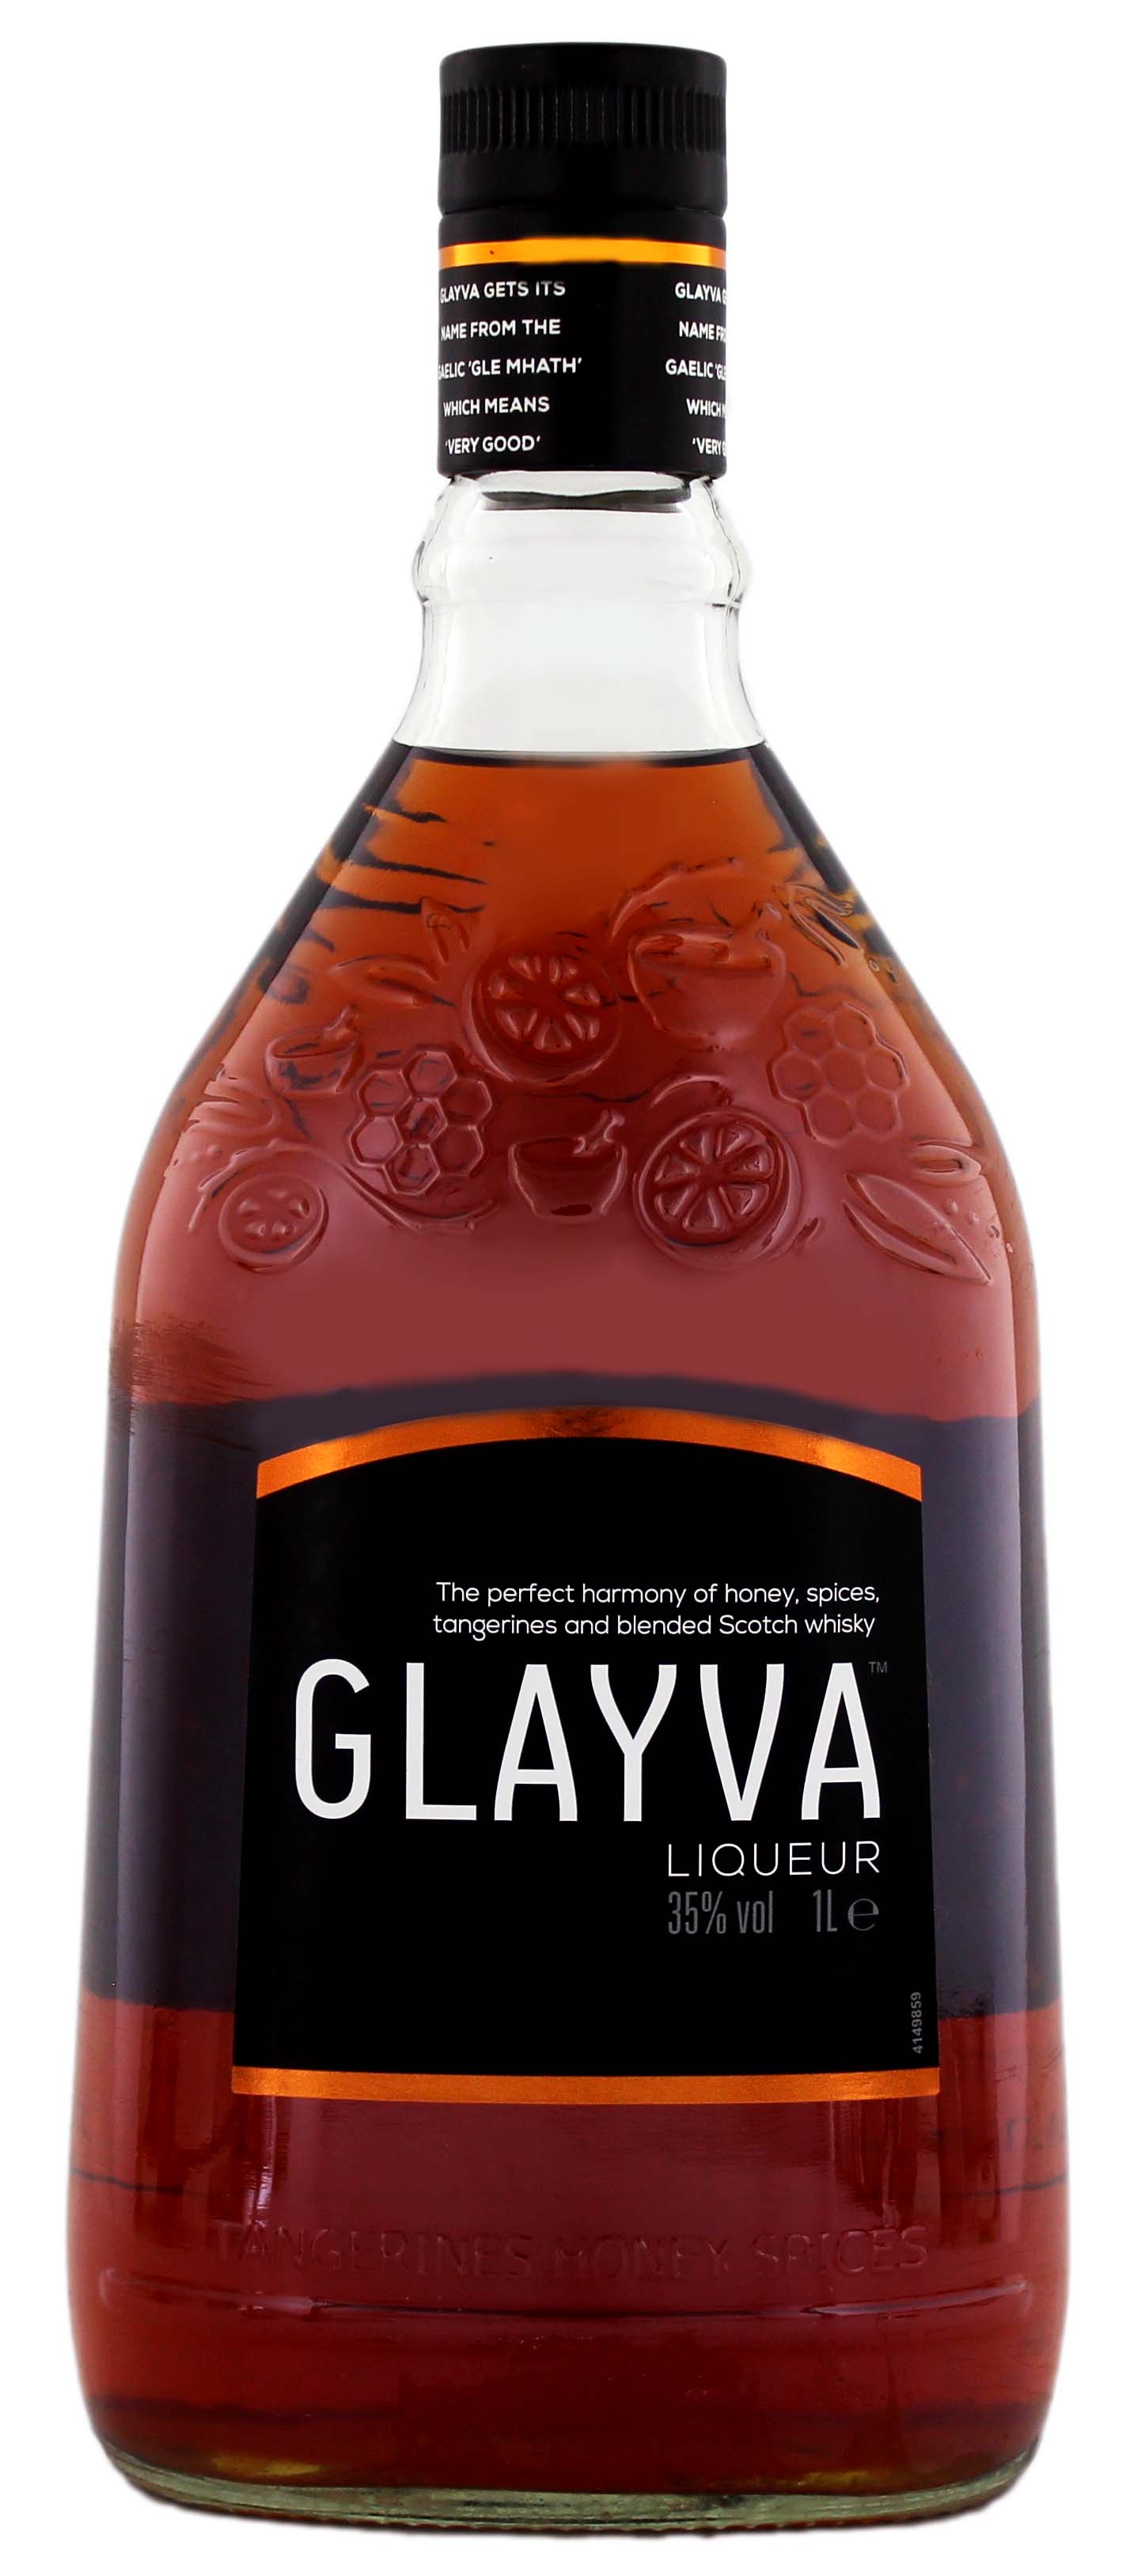 Whisky kaufen Online Liqueur jetzt im ! Glayva Drinkology Shop